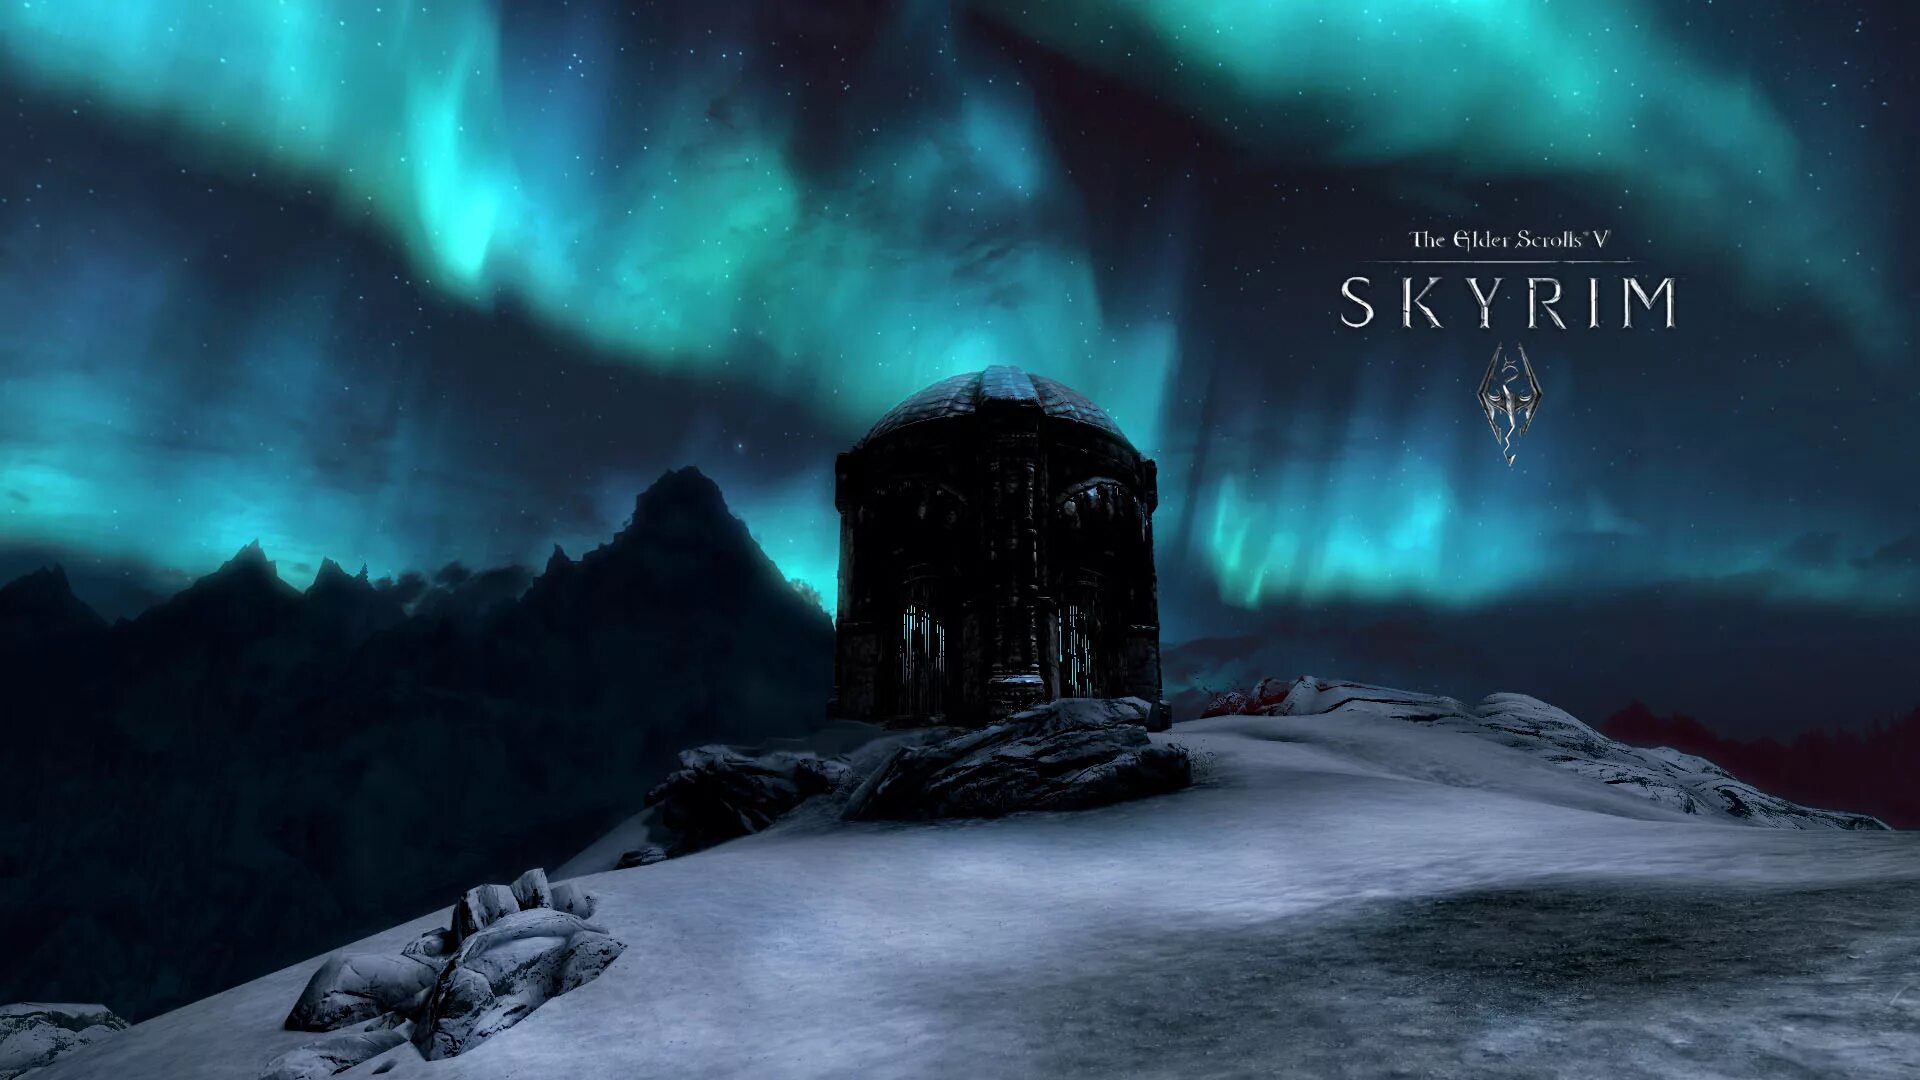 Skyrim the Elder Scrolls 5 гора. Гора антор скайрим. The Elder Scrolls v: Skyrim зима. Скайрим обои.